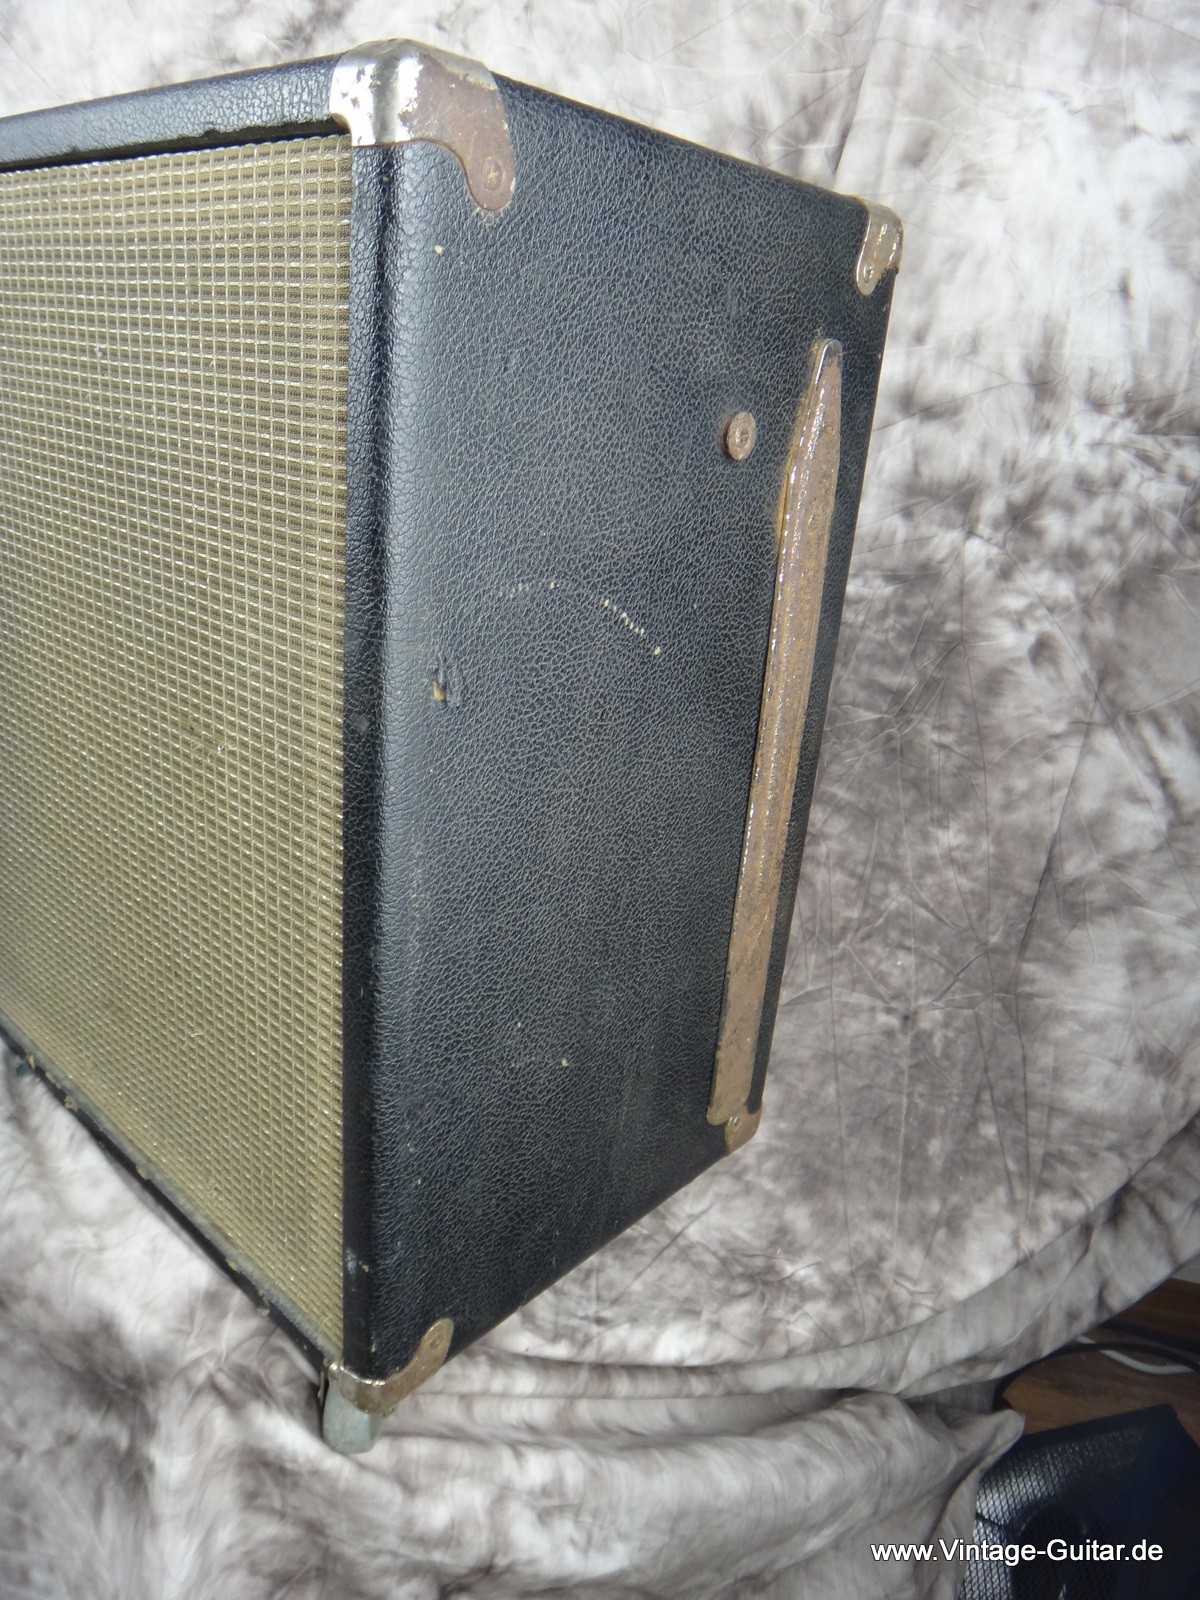 Fender-Cabinet-2x12-open-back-1964-003.JPG